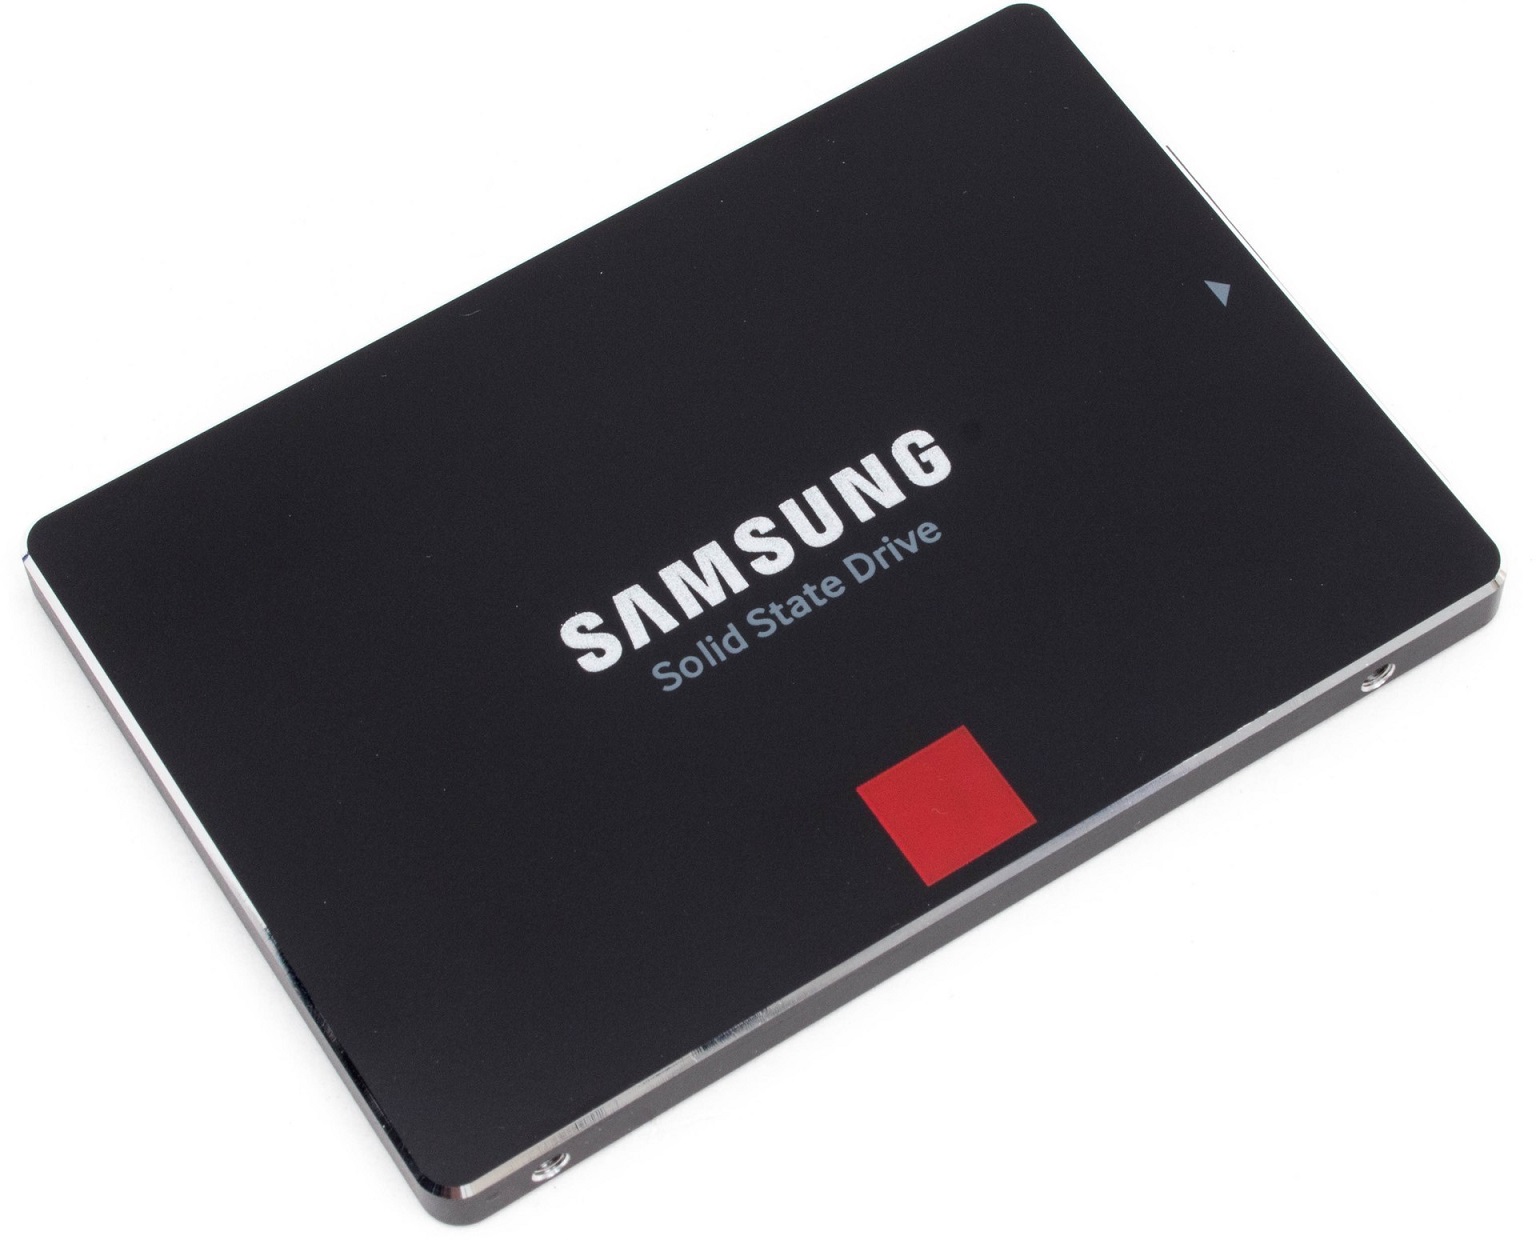 SSD - Samsung 850 Pro / 120GB